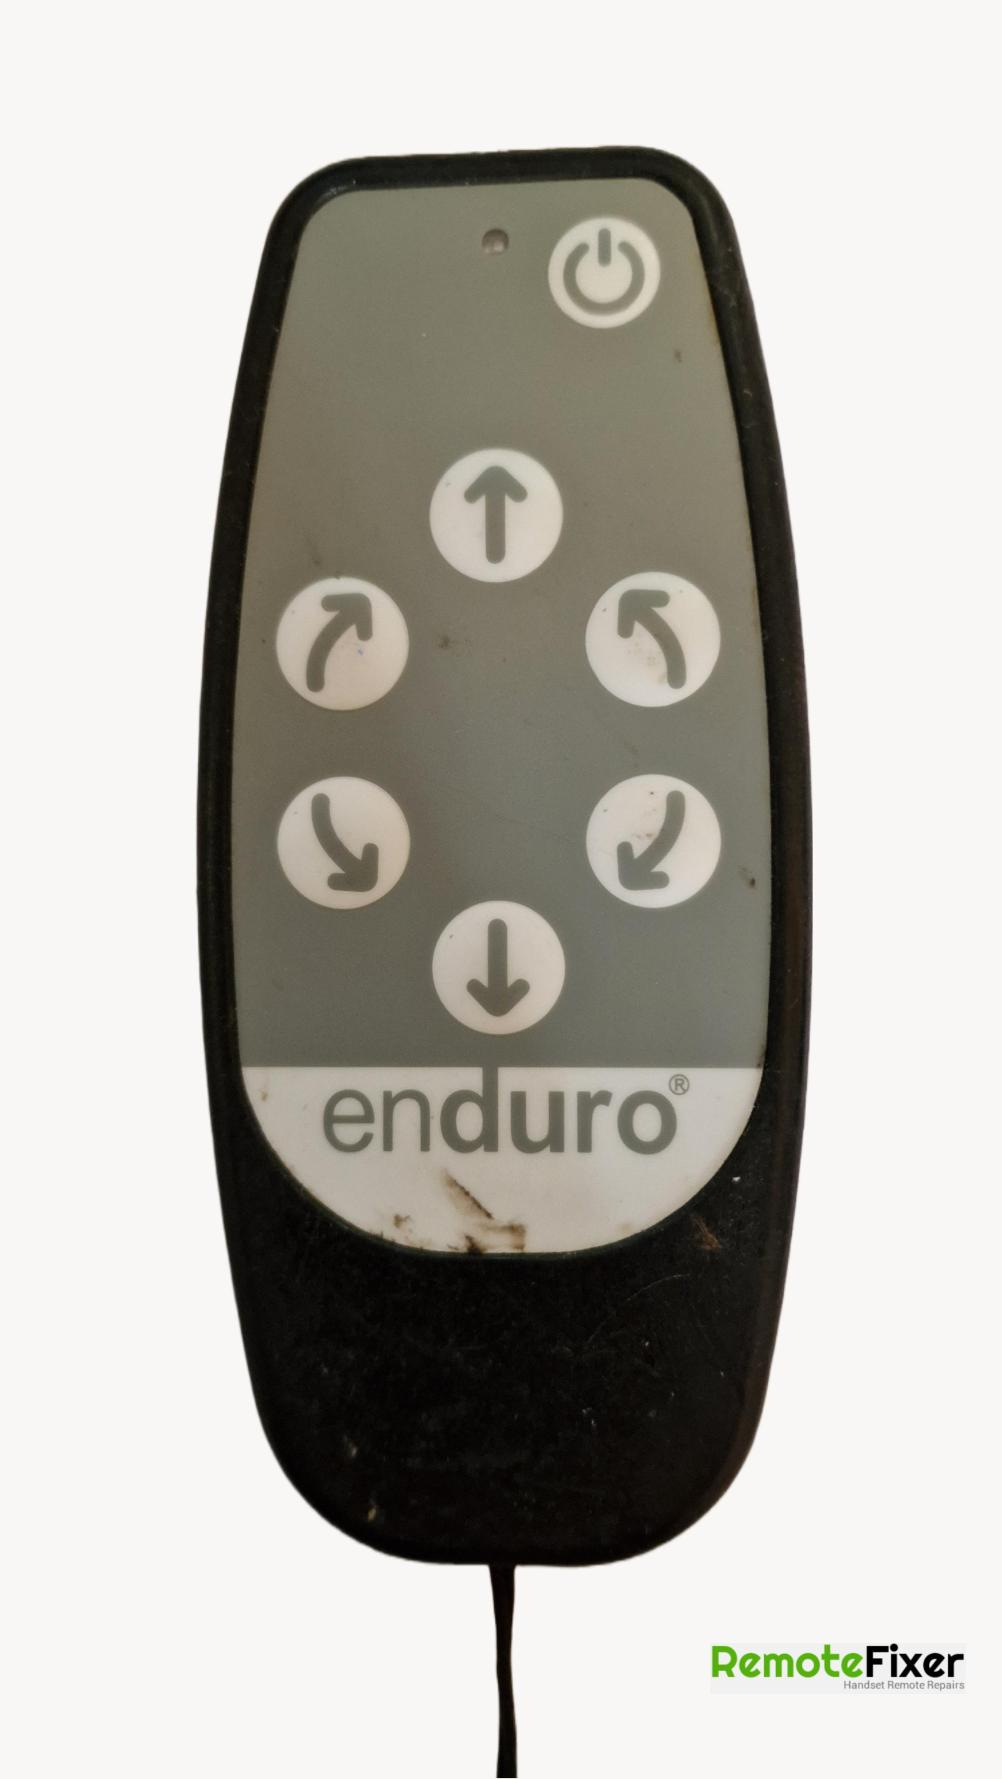 Enduro Em4444 Remote Control - Front Image